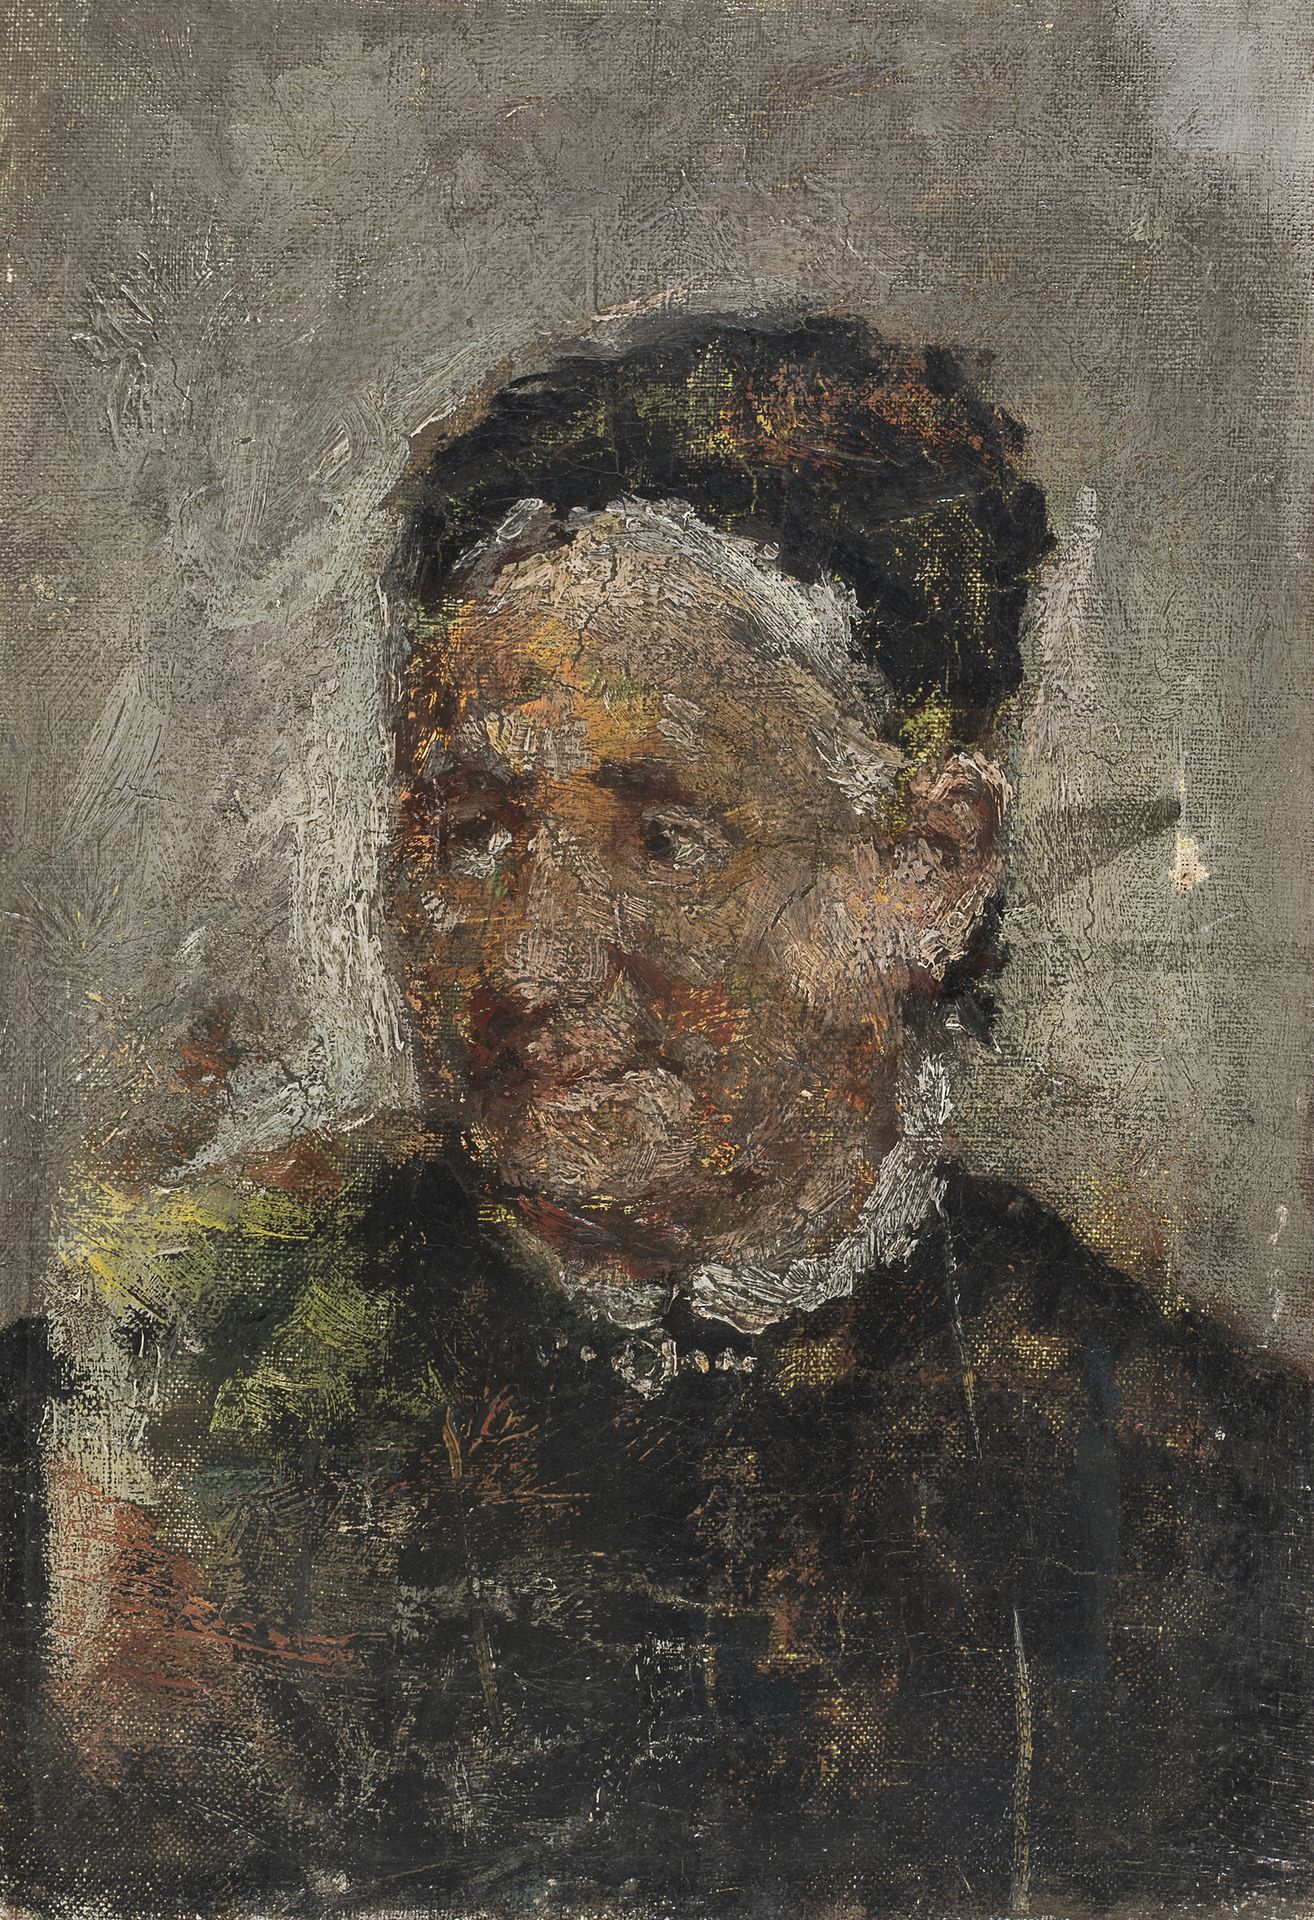 Null 20世纪画家



一位老年妇女的肖像

布面油画，32 x 22厘米

无符号